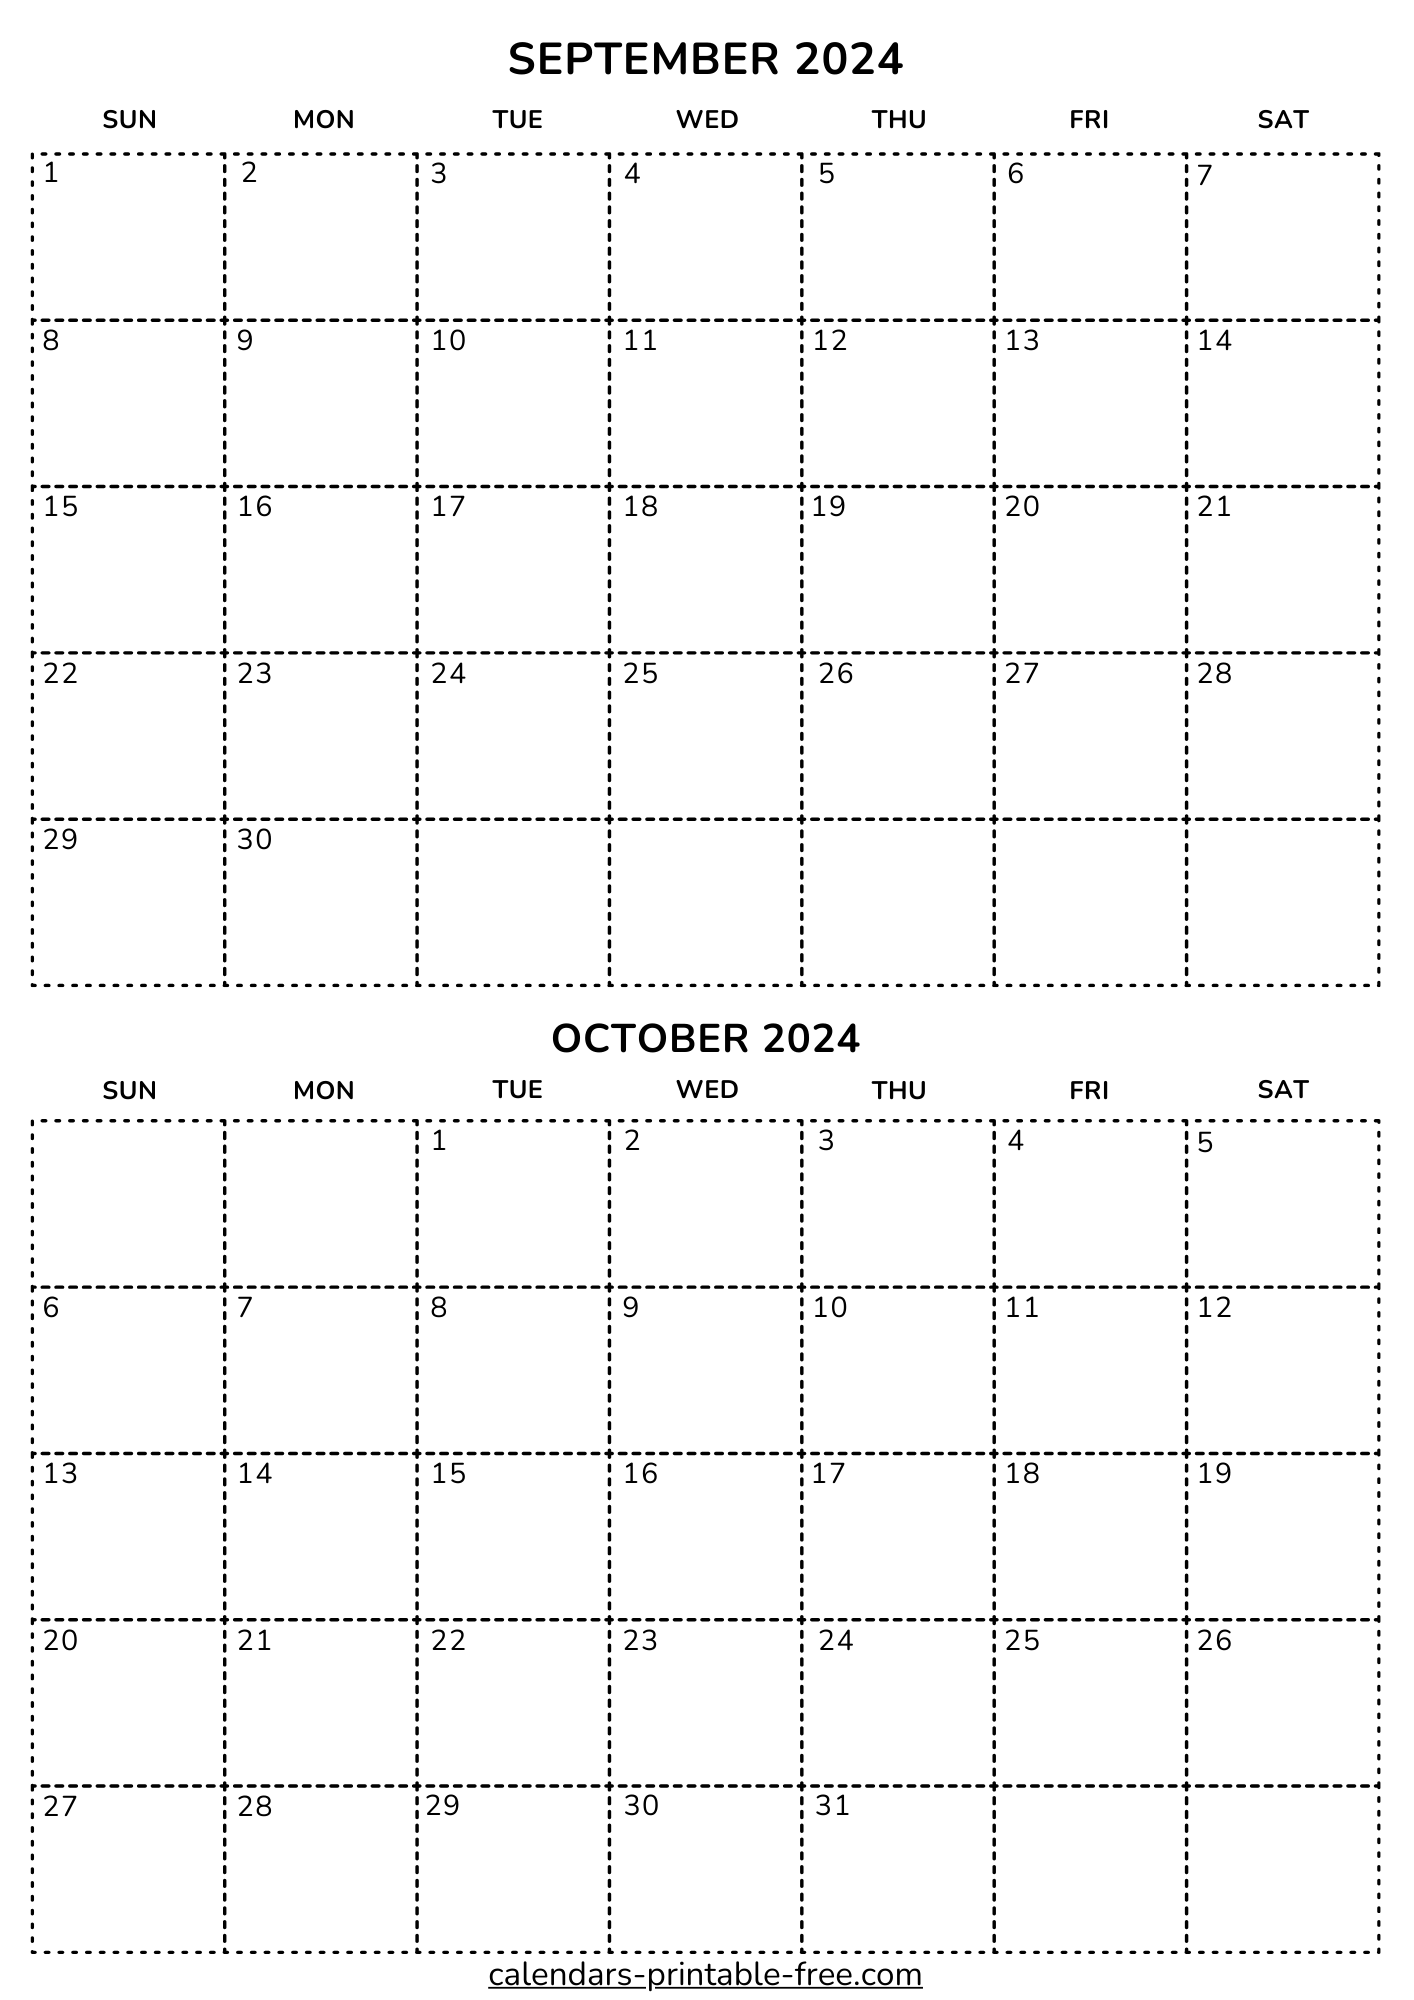 September and October 2024 Calendar